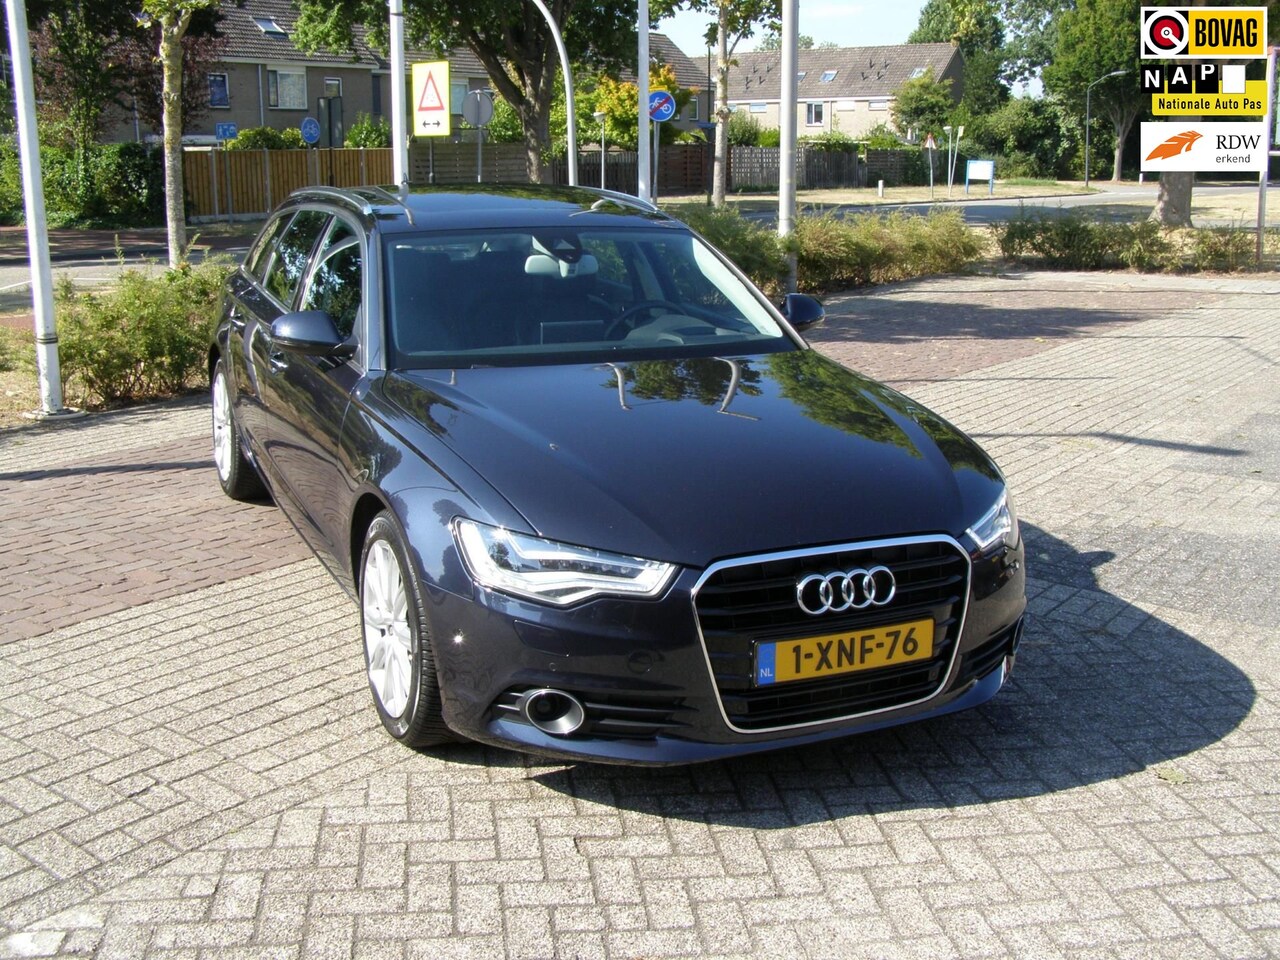 Audi A6 Avant - 3.0 TDI quattro Business Edition heel veel opties - AutoWereld.nl